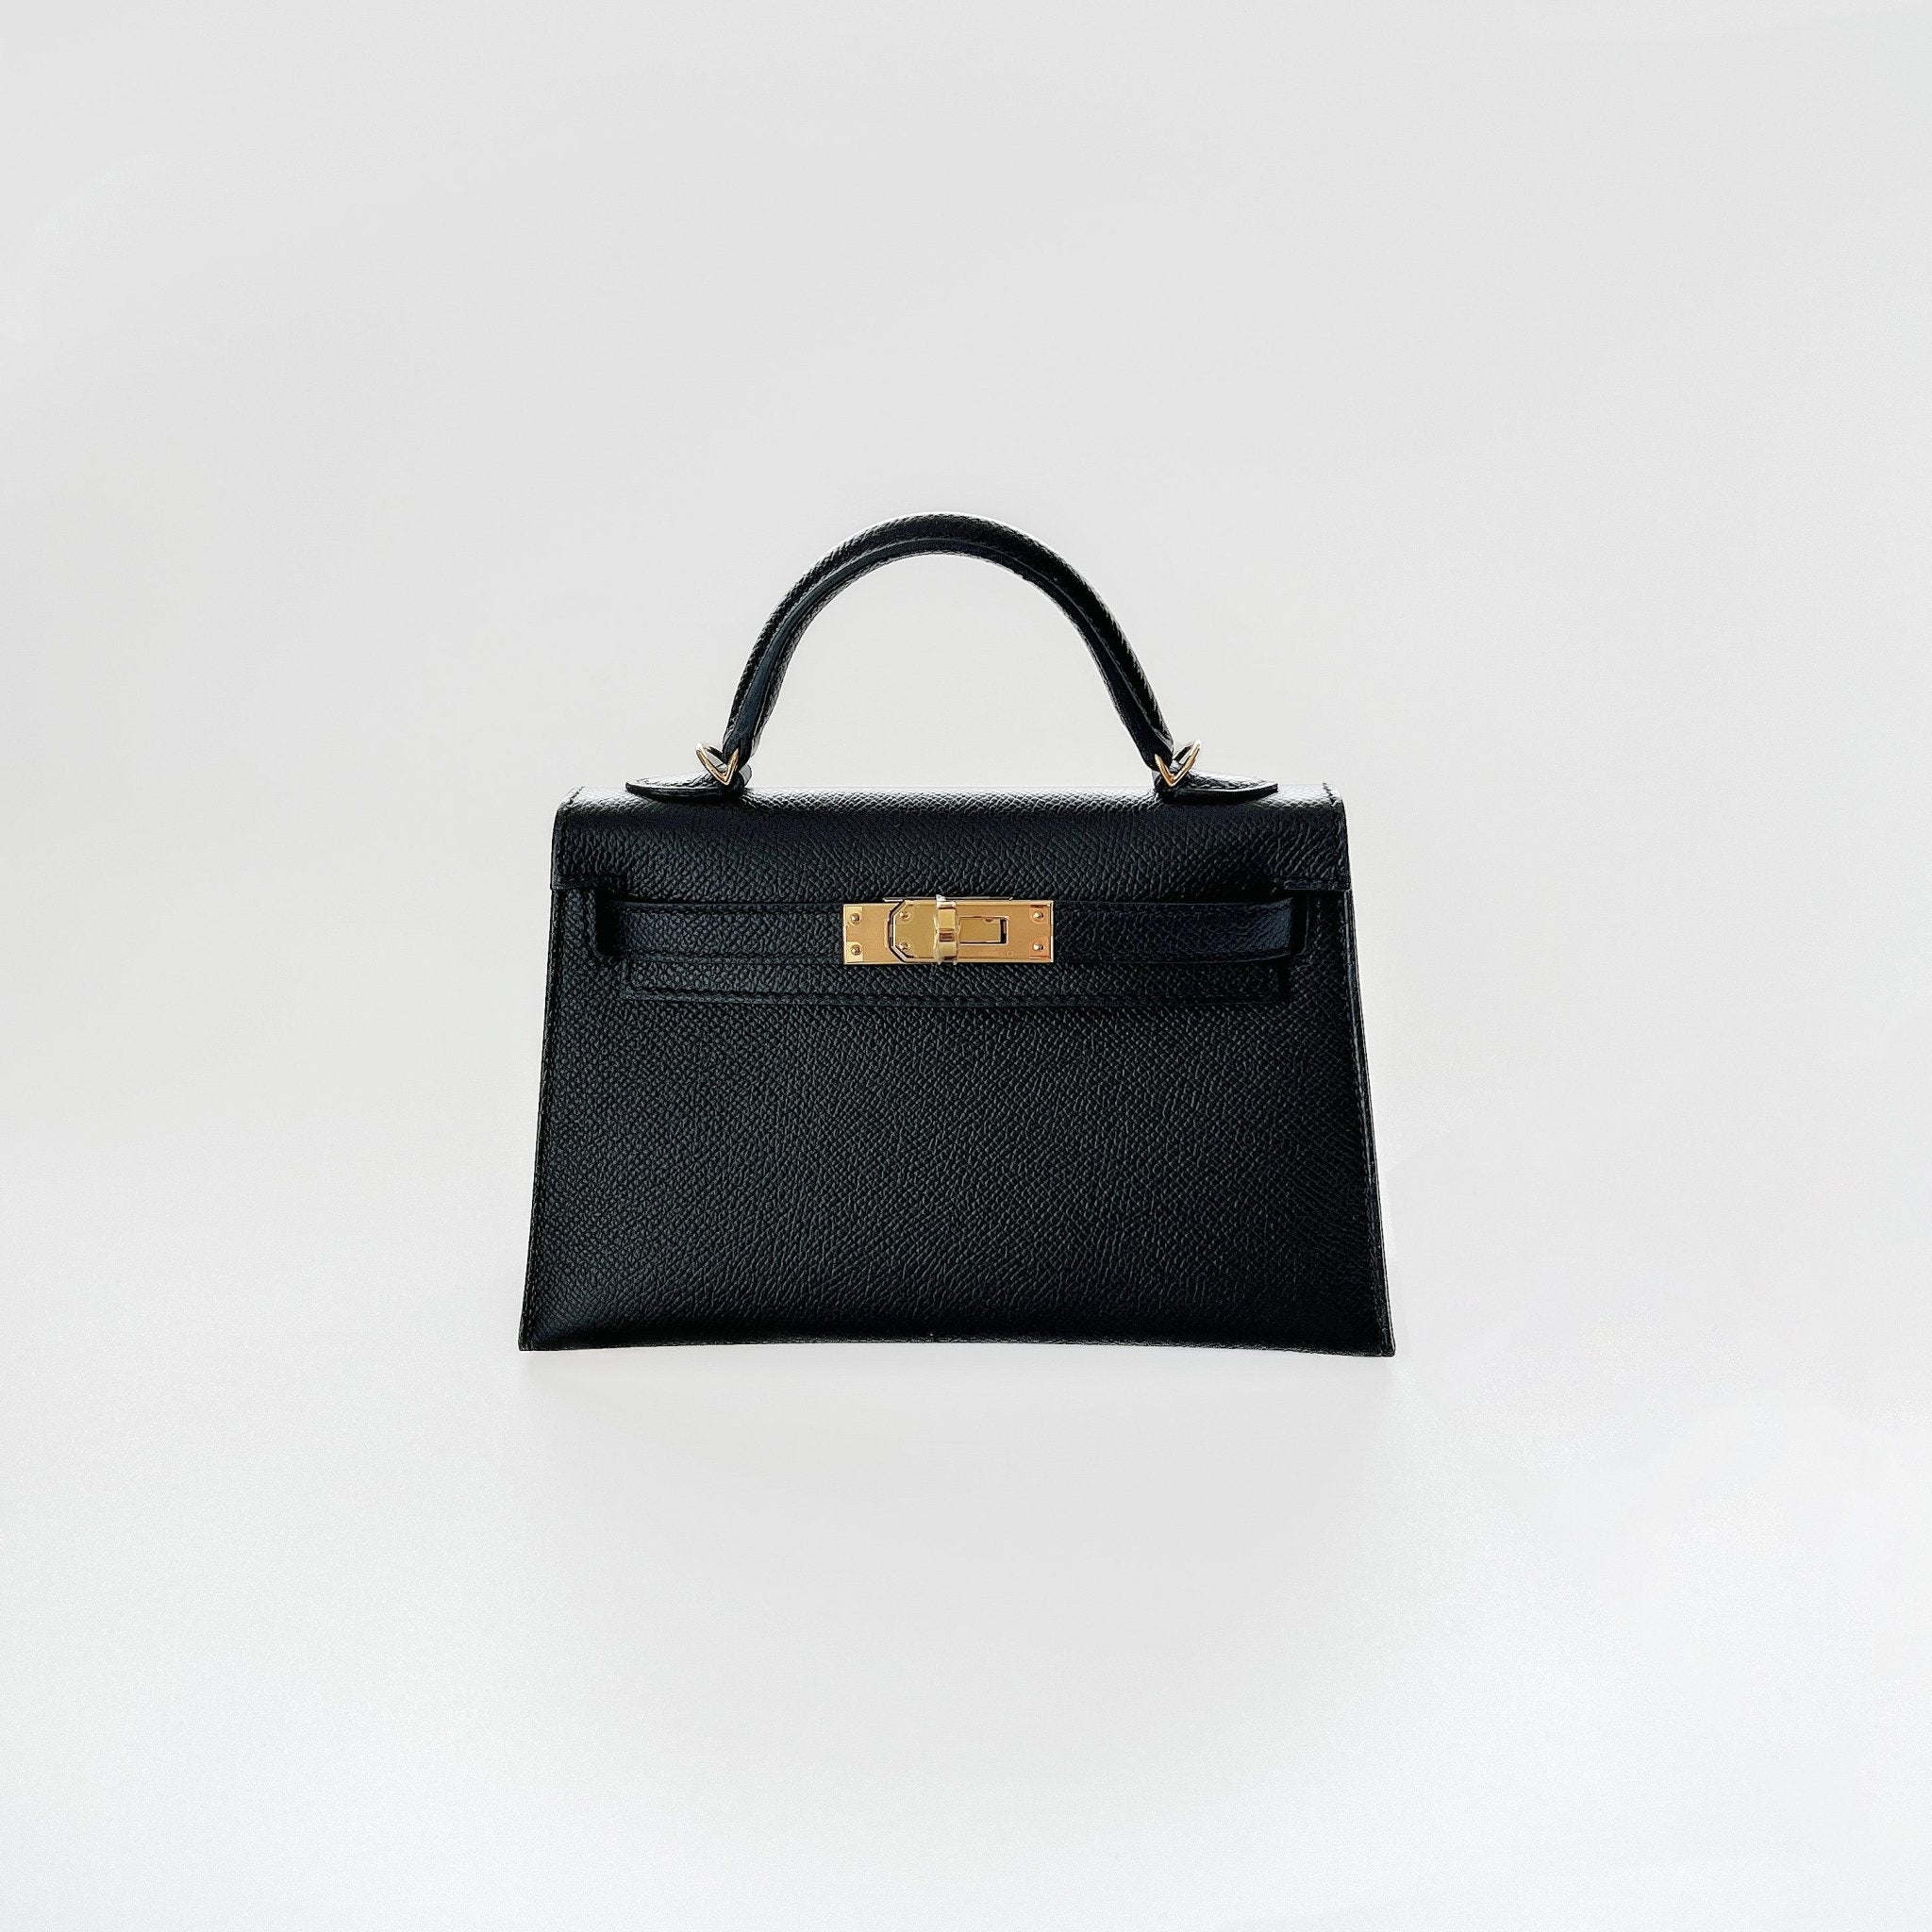 Hermès - Authenticated Kelly Mini Handbag - Leather Black Plain for Women, Never Worn